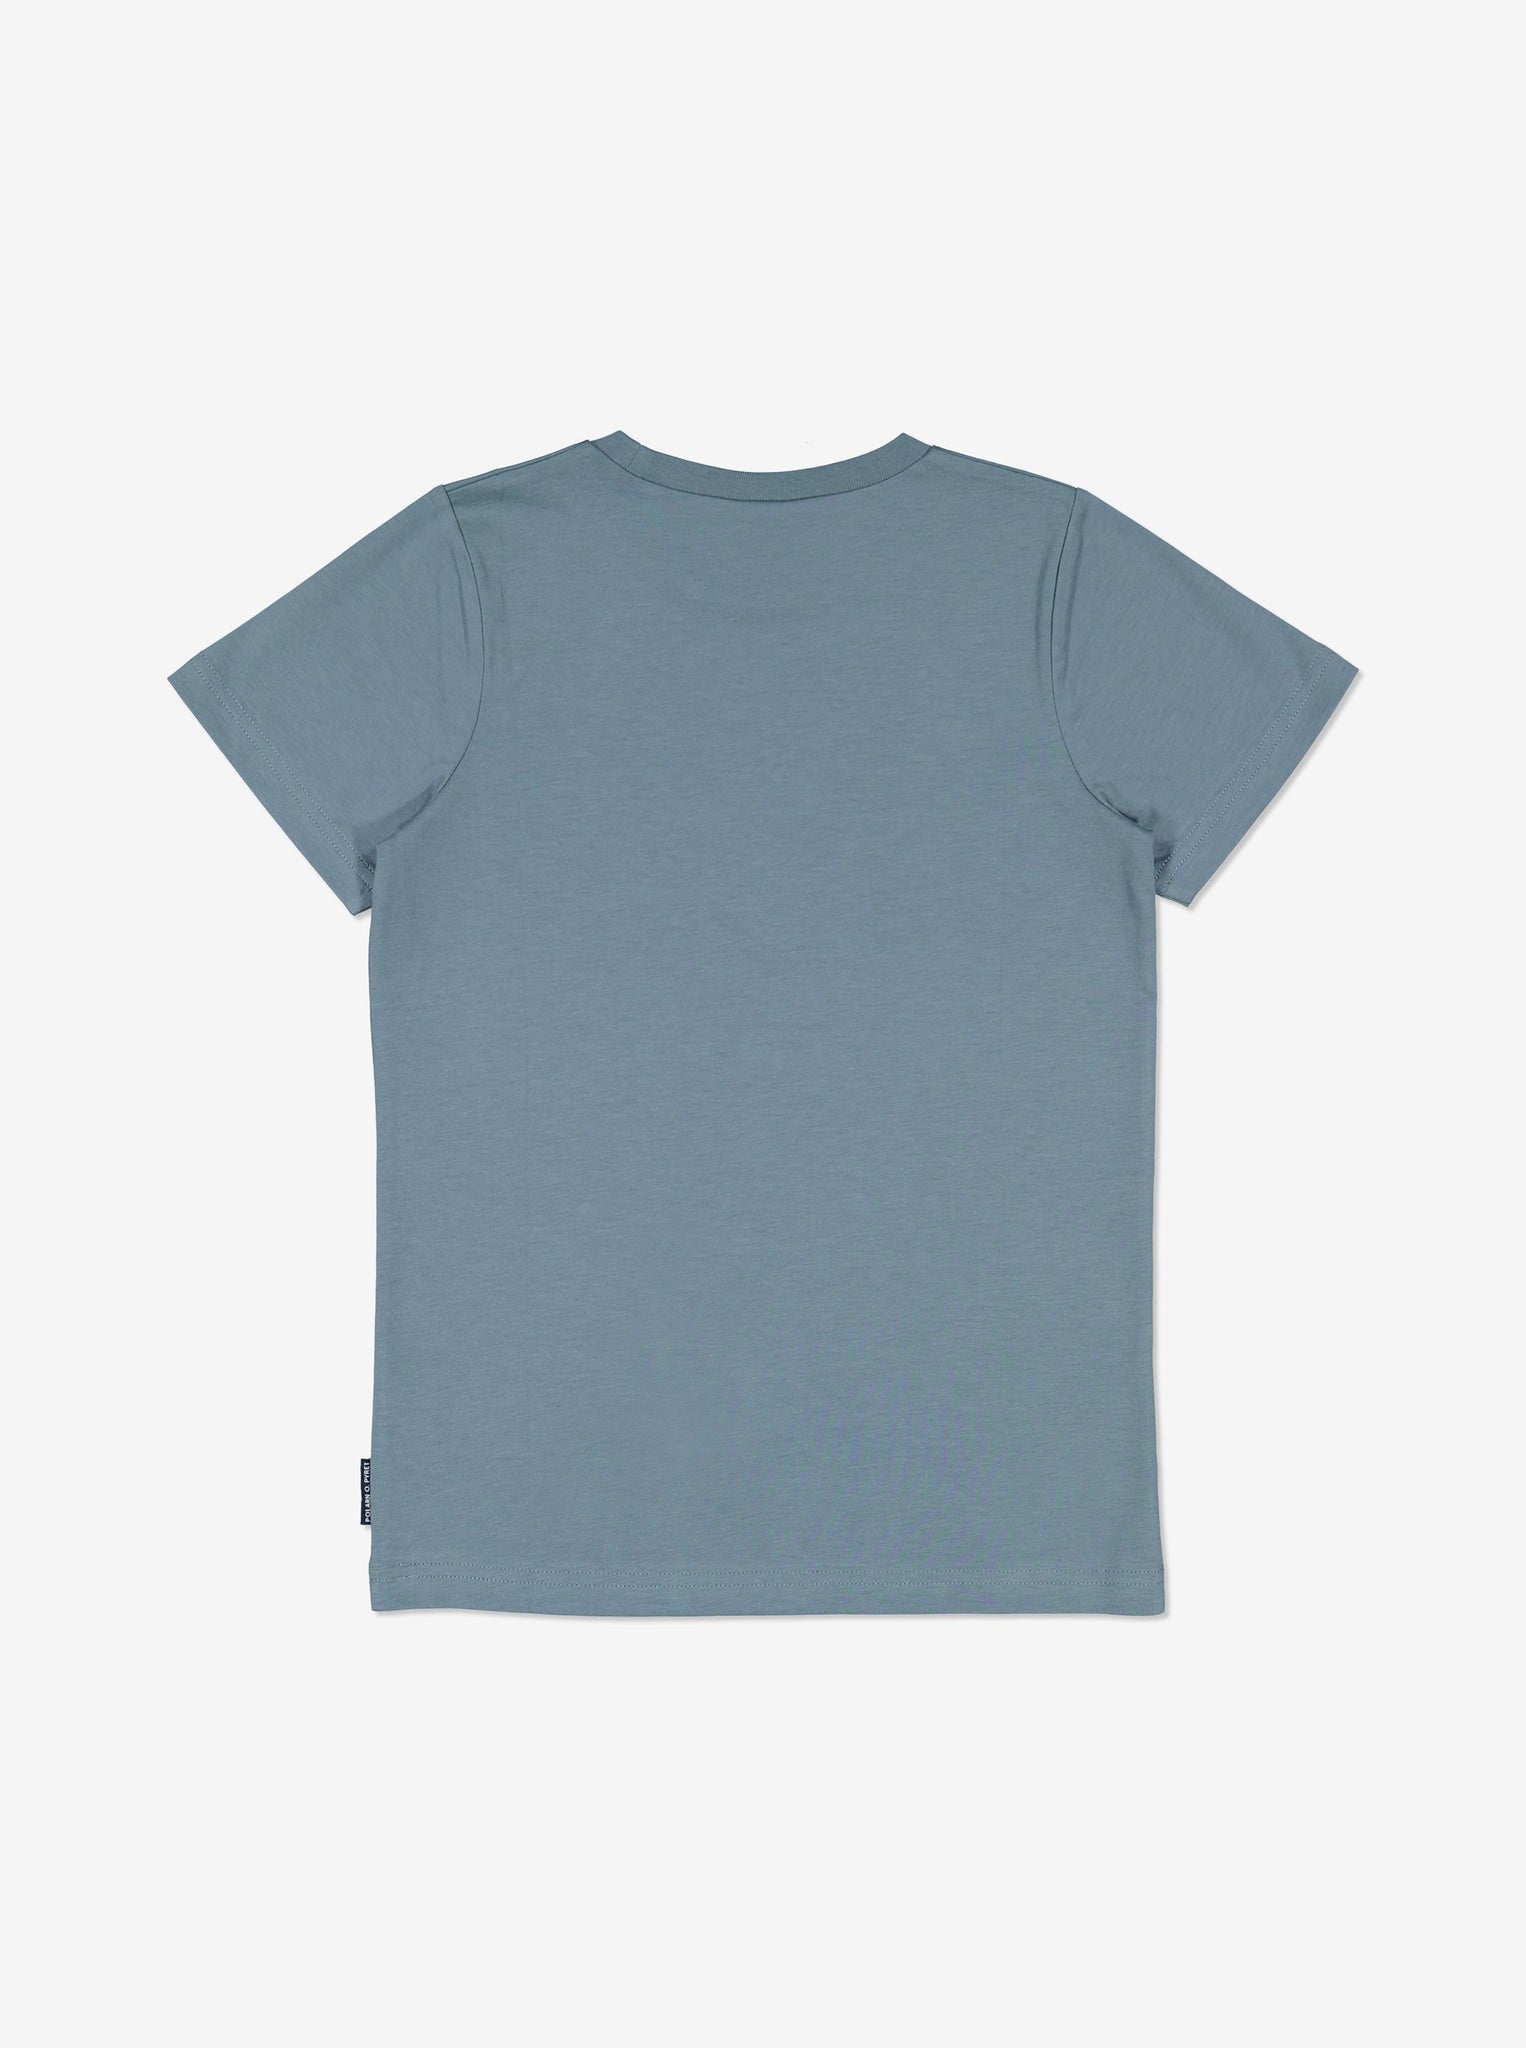  Blue Organic Kids Car T-Shirt from Polarn O. Pyret Kidswear. Made with 100% organic cotton.